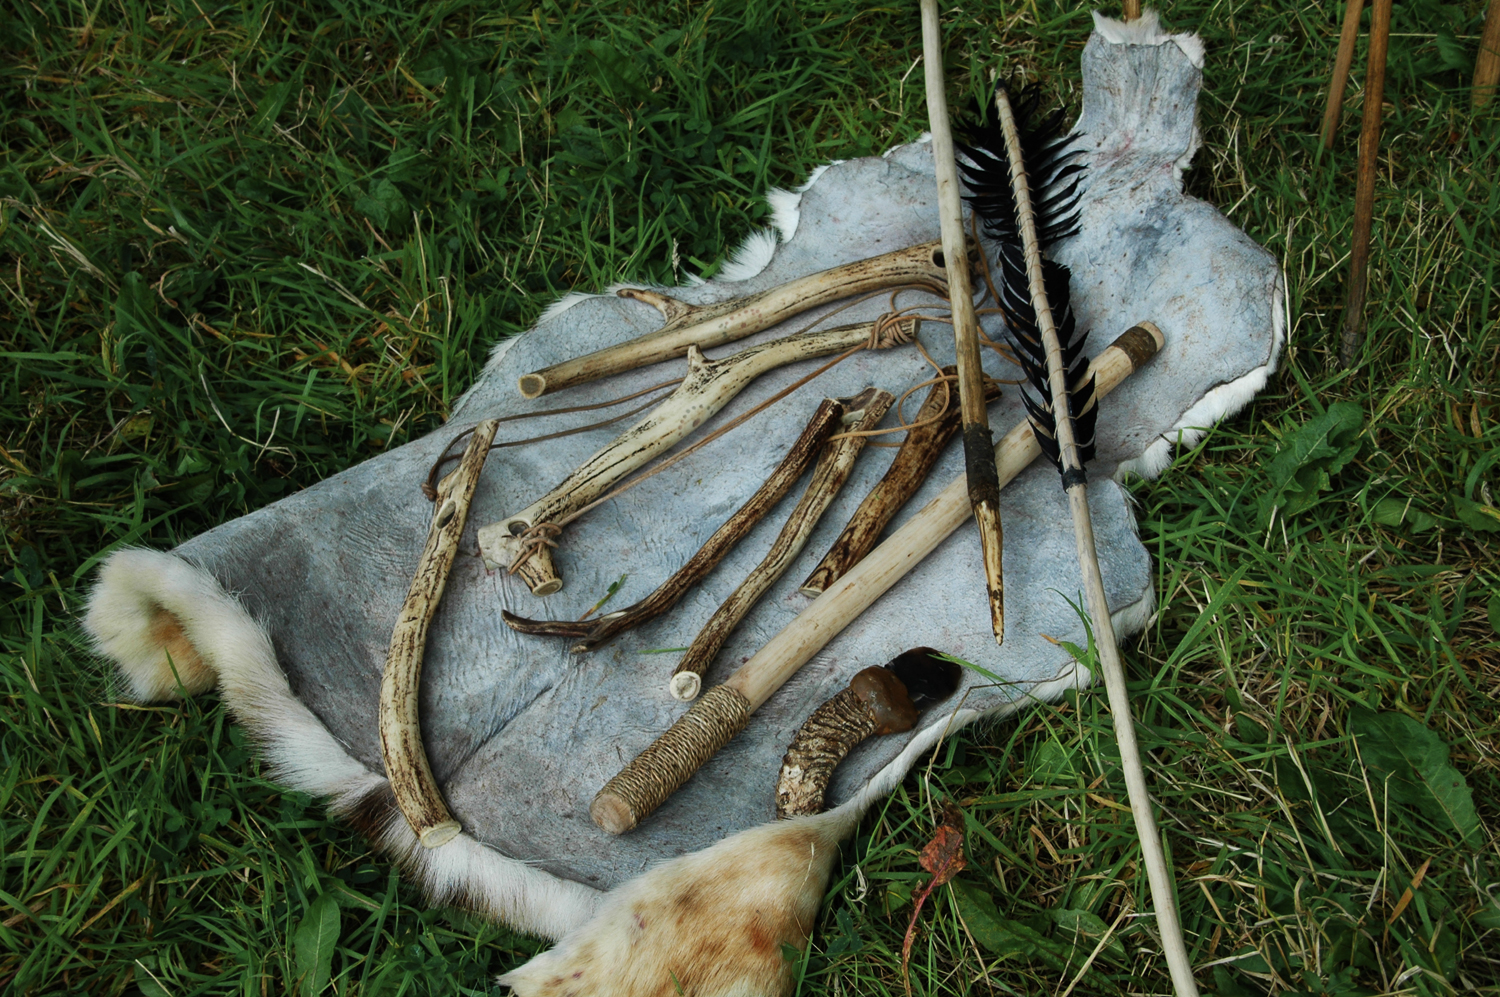 neanderthals hunting tools